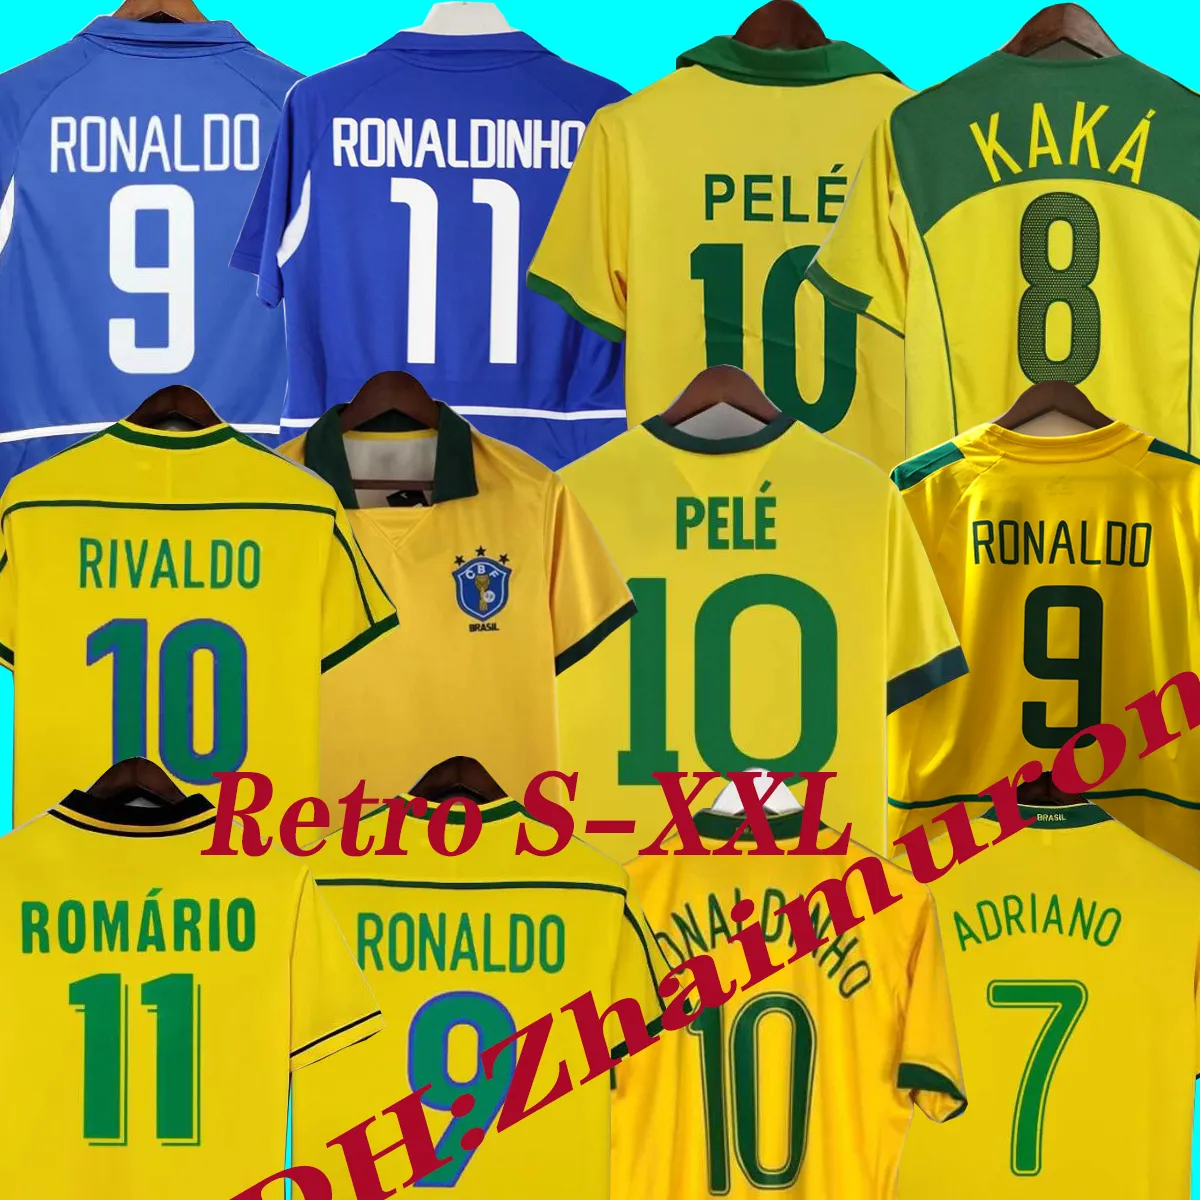 1957 1970 1998 BRASIL SOCKER JERSEYS 2002 RETRO -shirts Carlos Romario Ronaldinho 2004 Camisa de Futebol 1994 Brazils 2006 1988 Rivaldo Adriano Joelinton Football